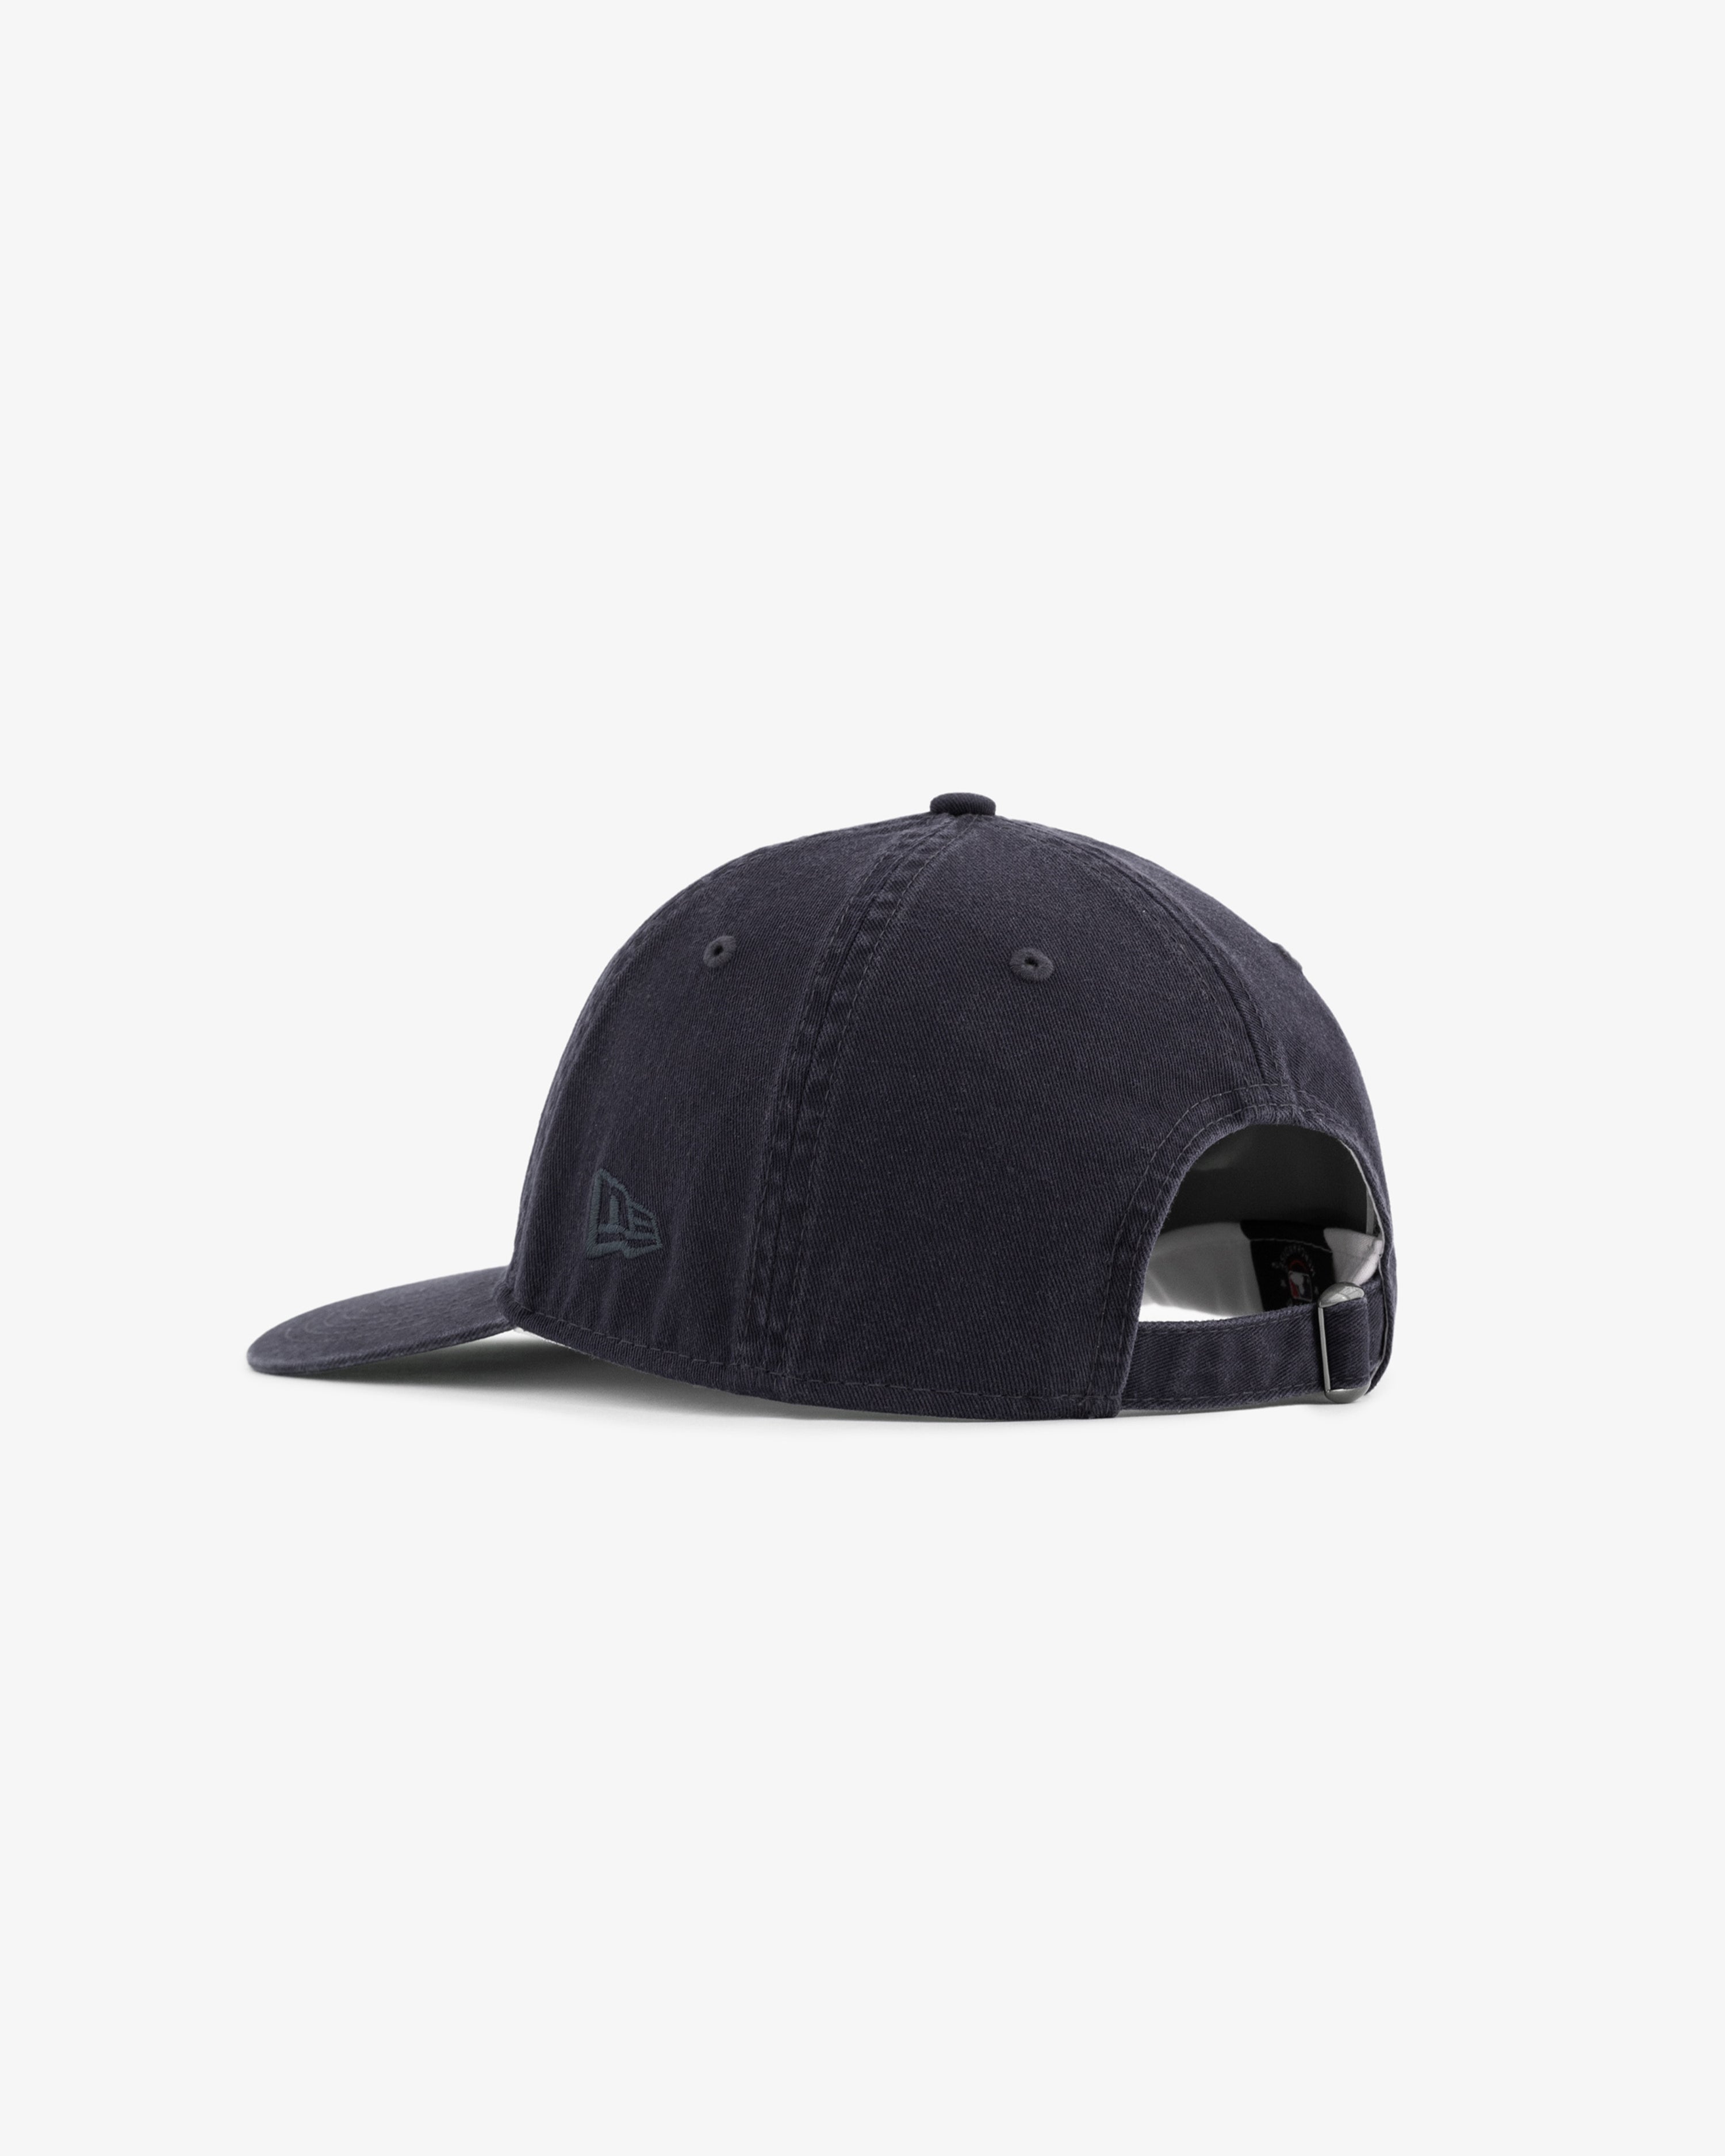 ALD / New Era Yankees Ballpark Hat